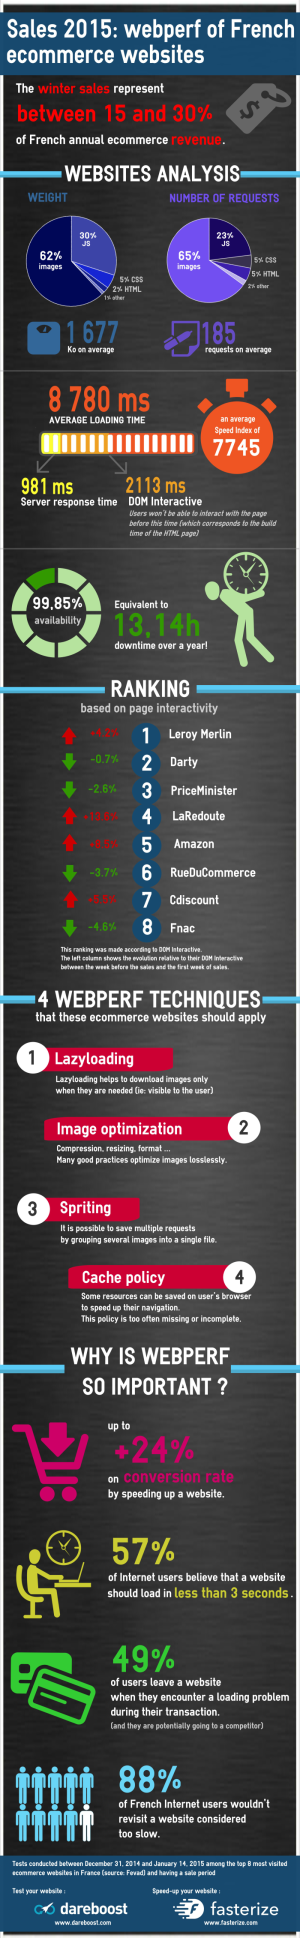 Webperf french ecommerce website